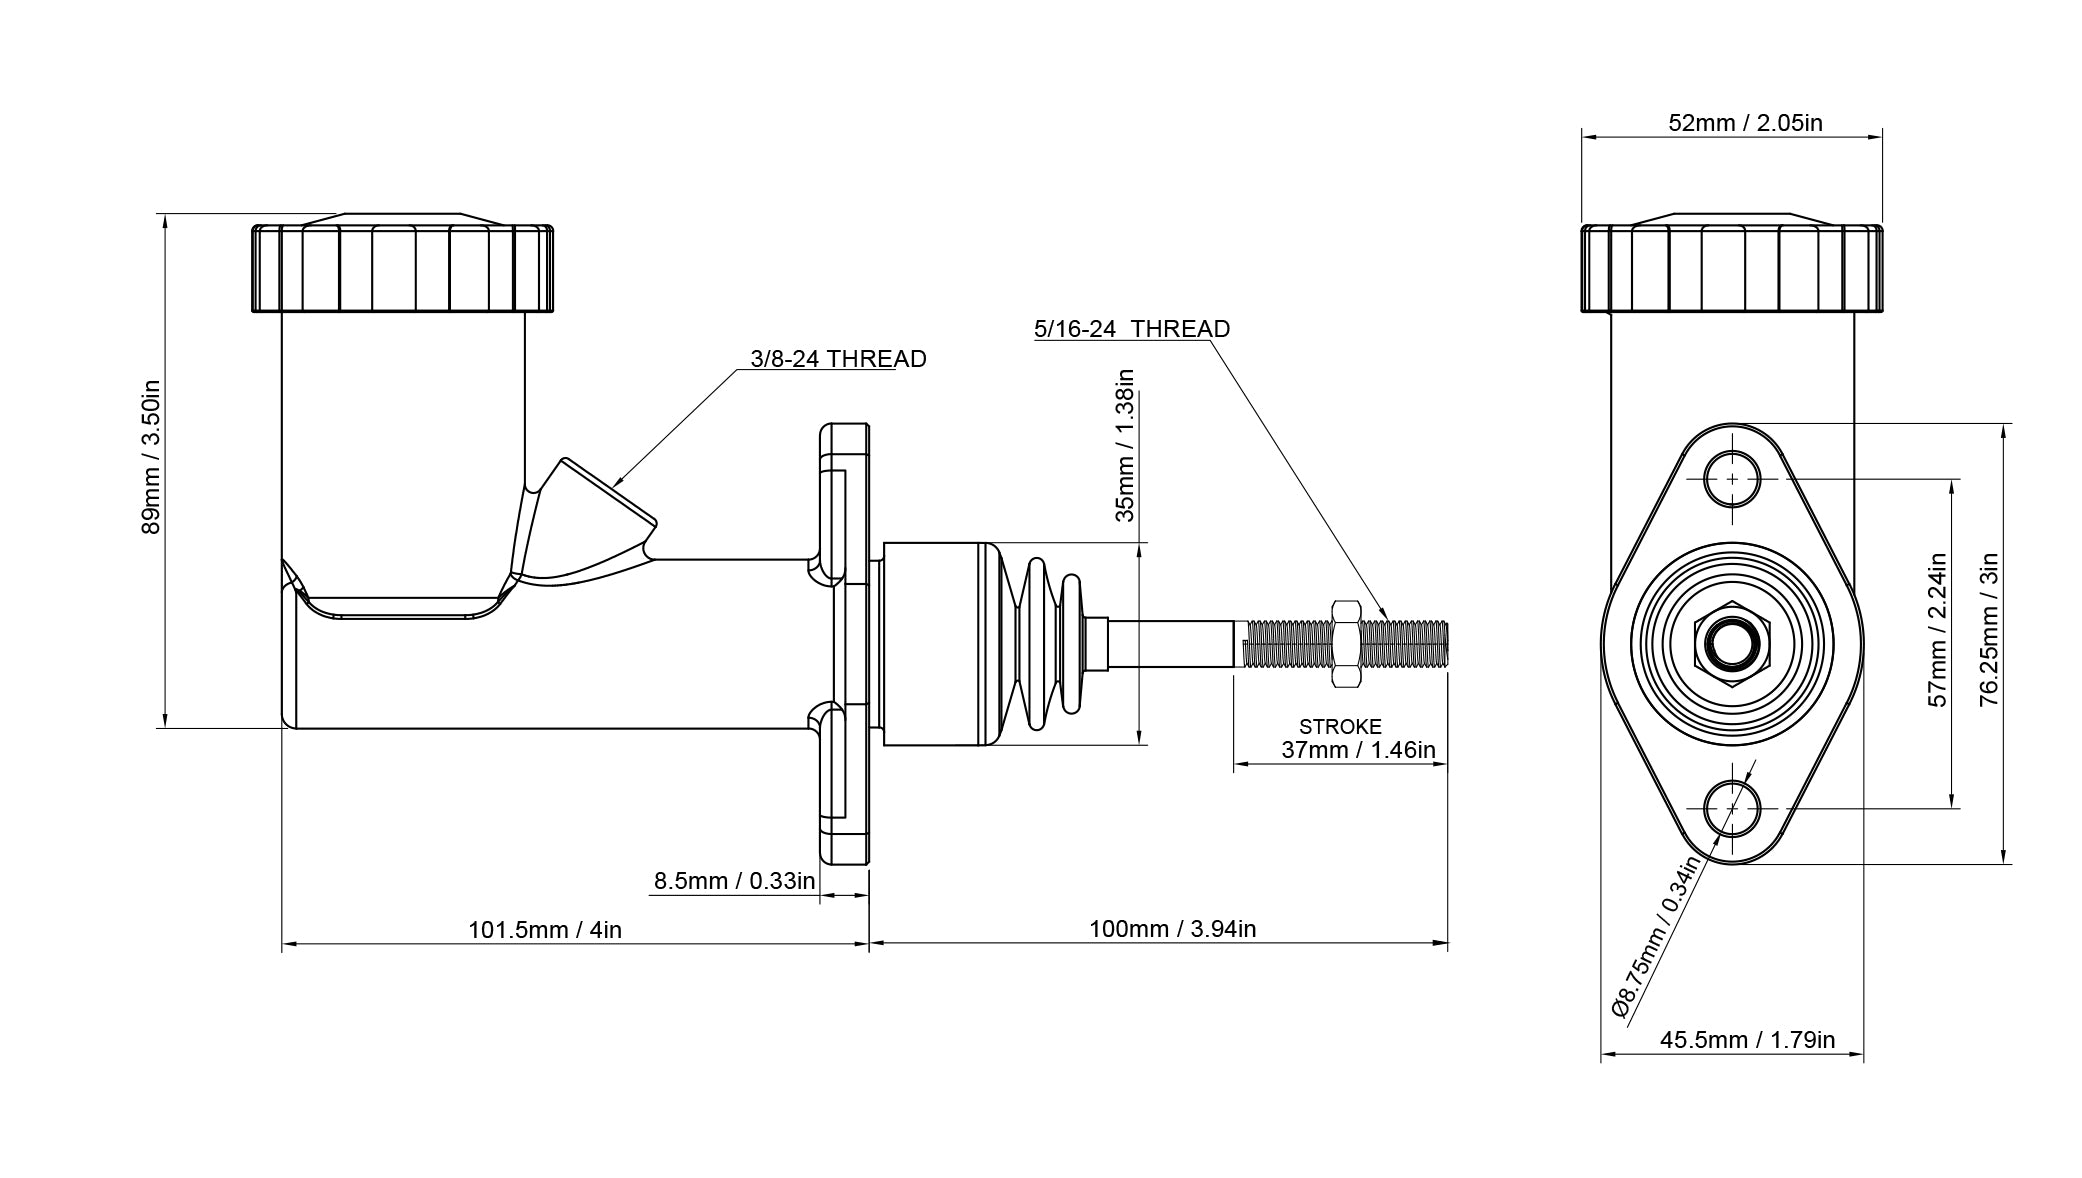 Stand-alone 3/4" internal reservoir master cylinder